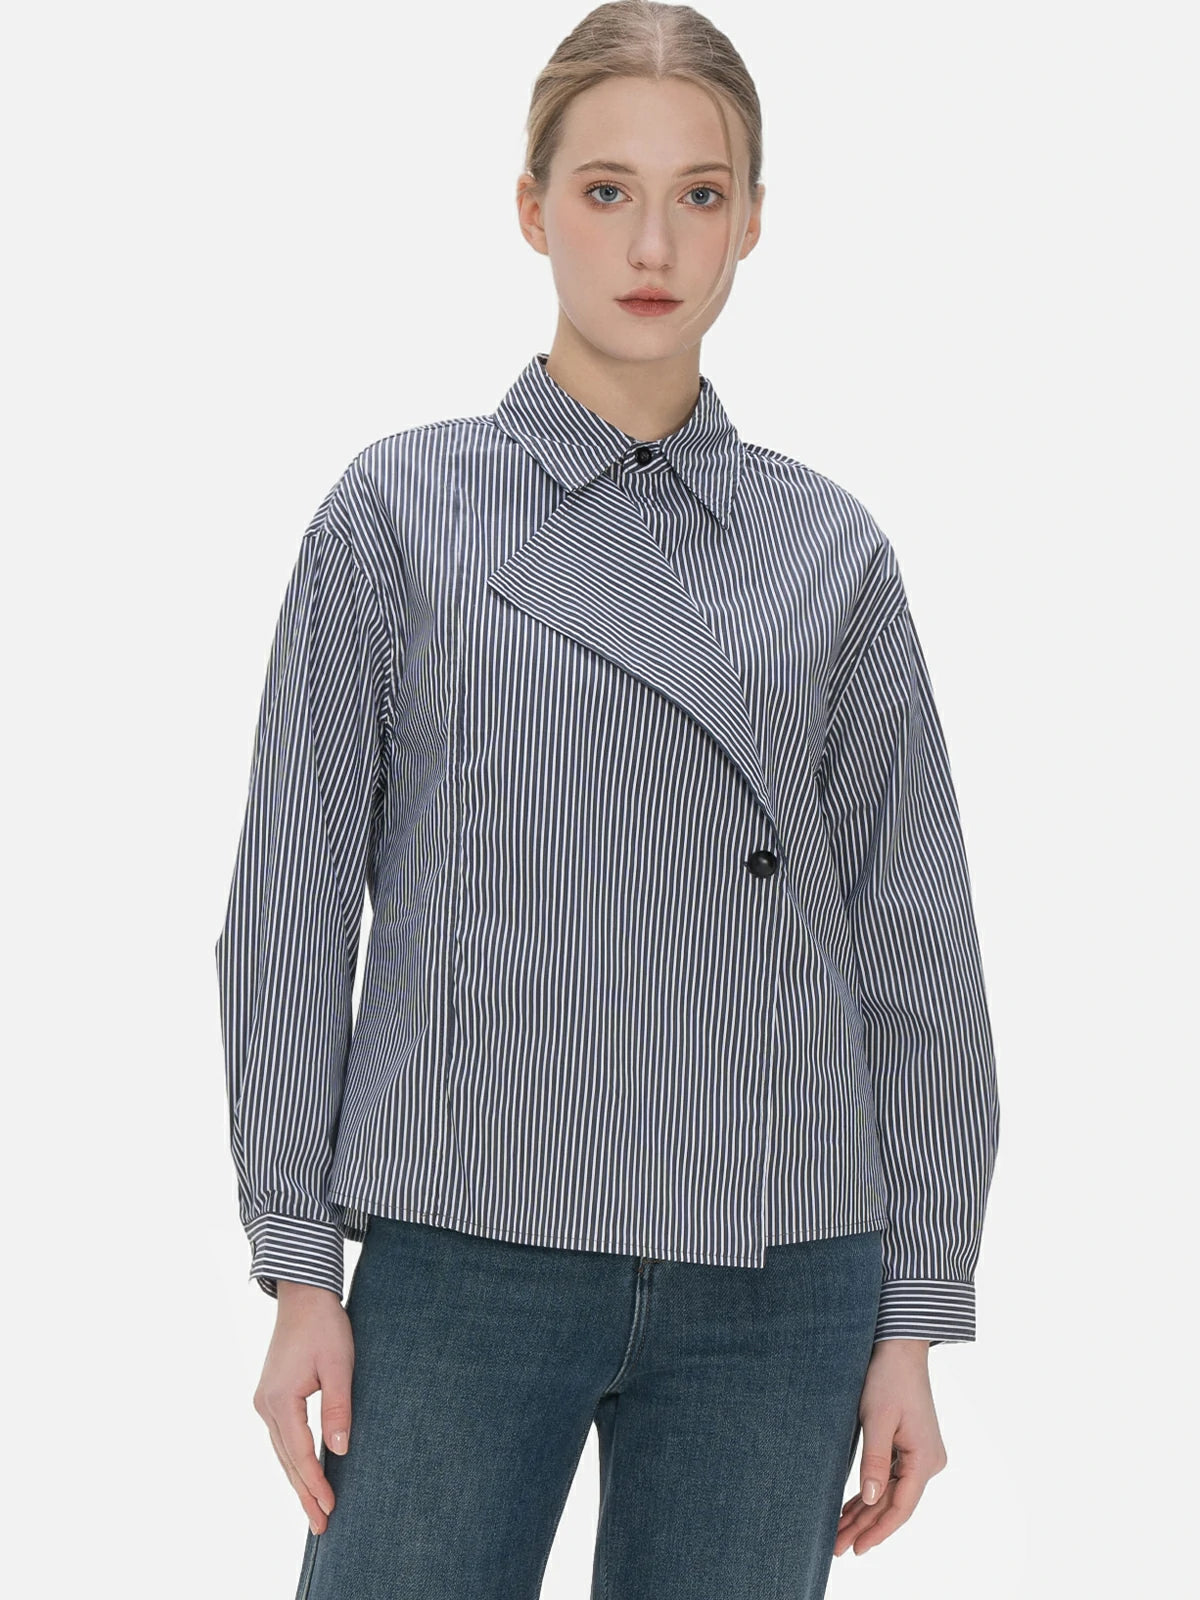 Splice design women&#39;s shirts for a modern look